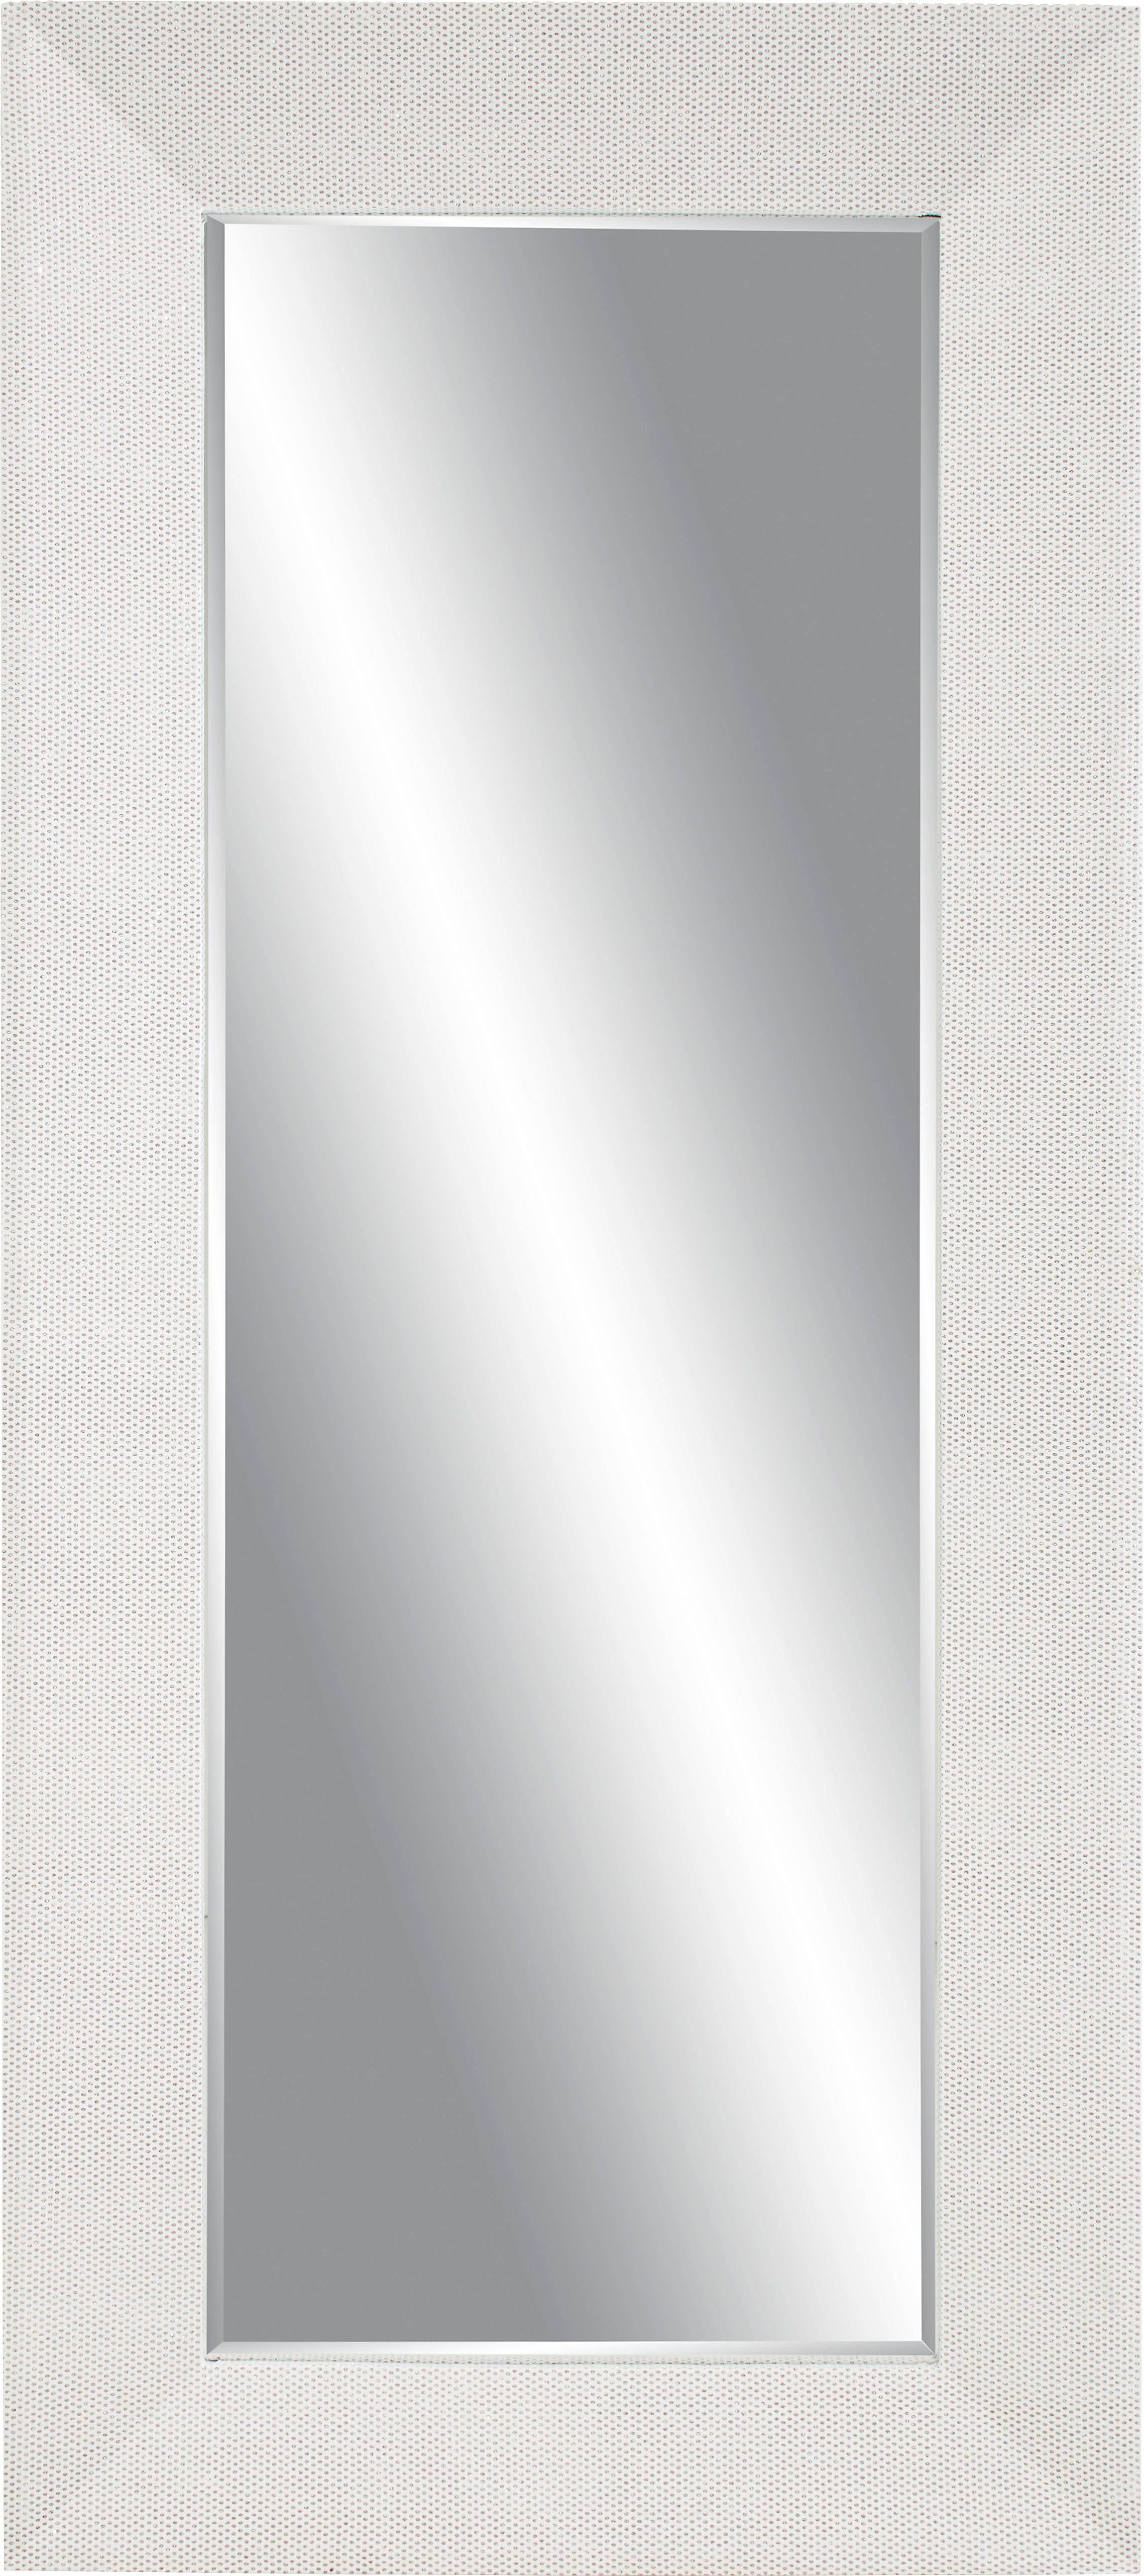 Wandspiegel ca. 80x180x5cm - Silberfarben, LIFESTYLE, Glas/Holz (80/180/5cm) - Modern Living